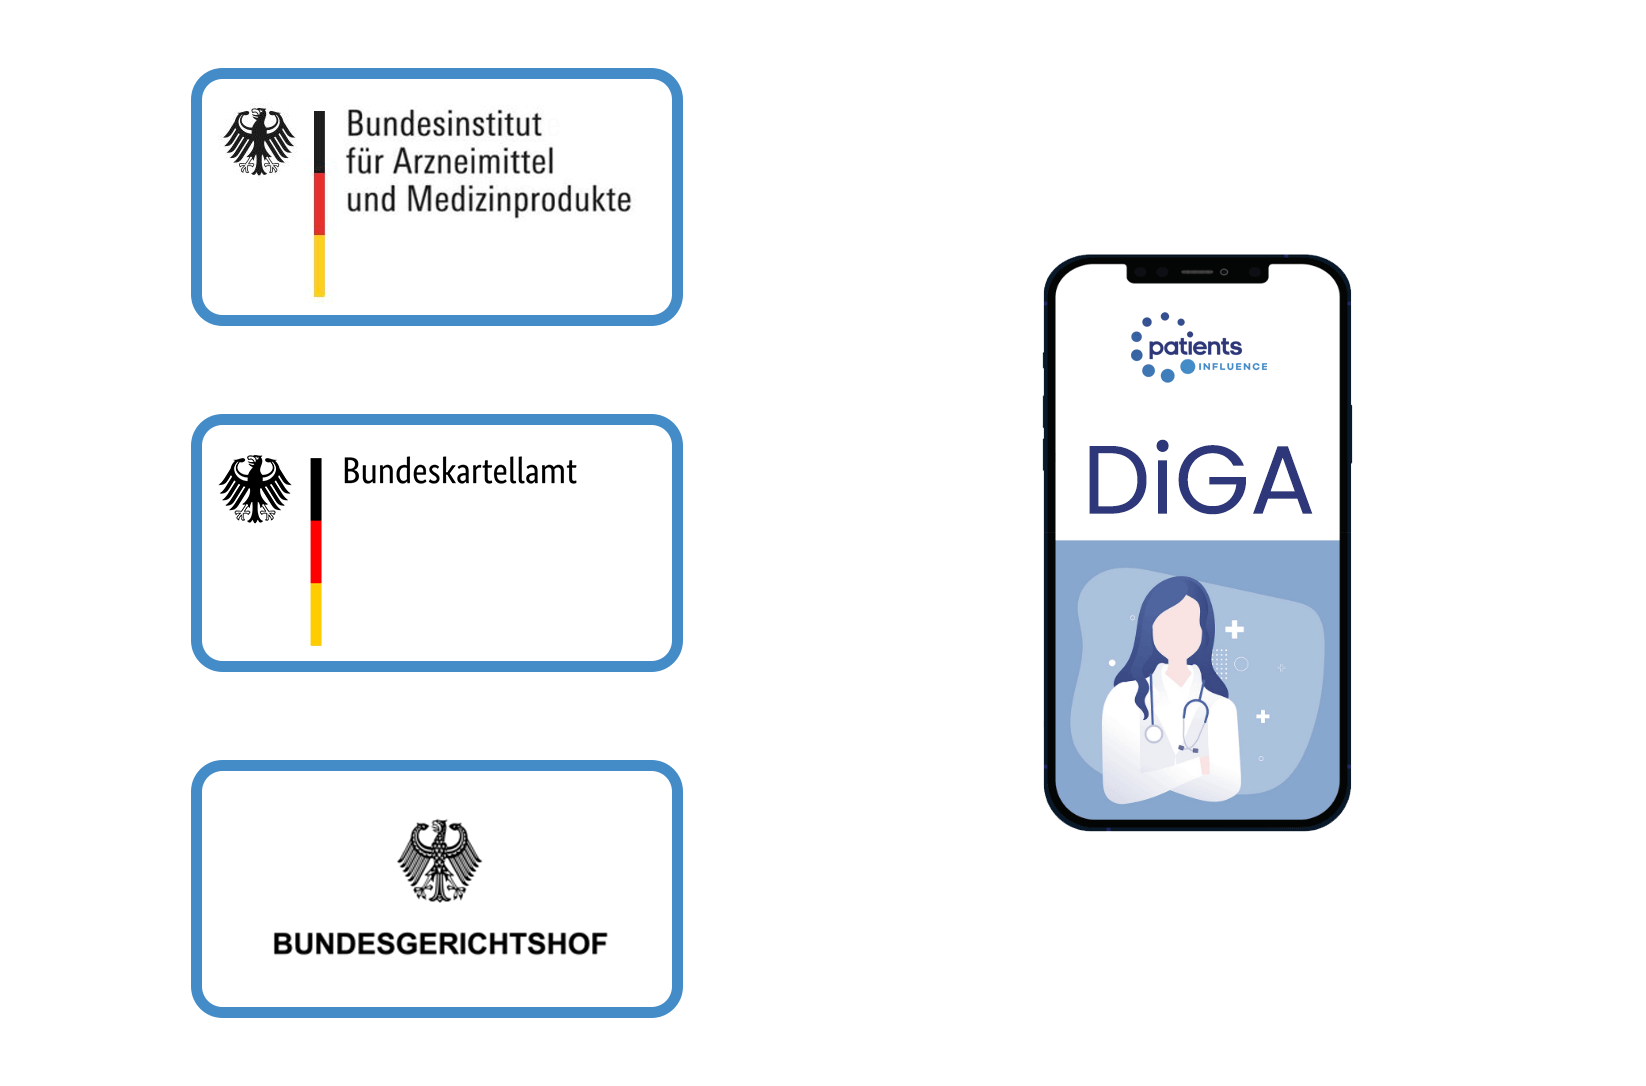 Regulatory bodies for DiGA